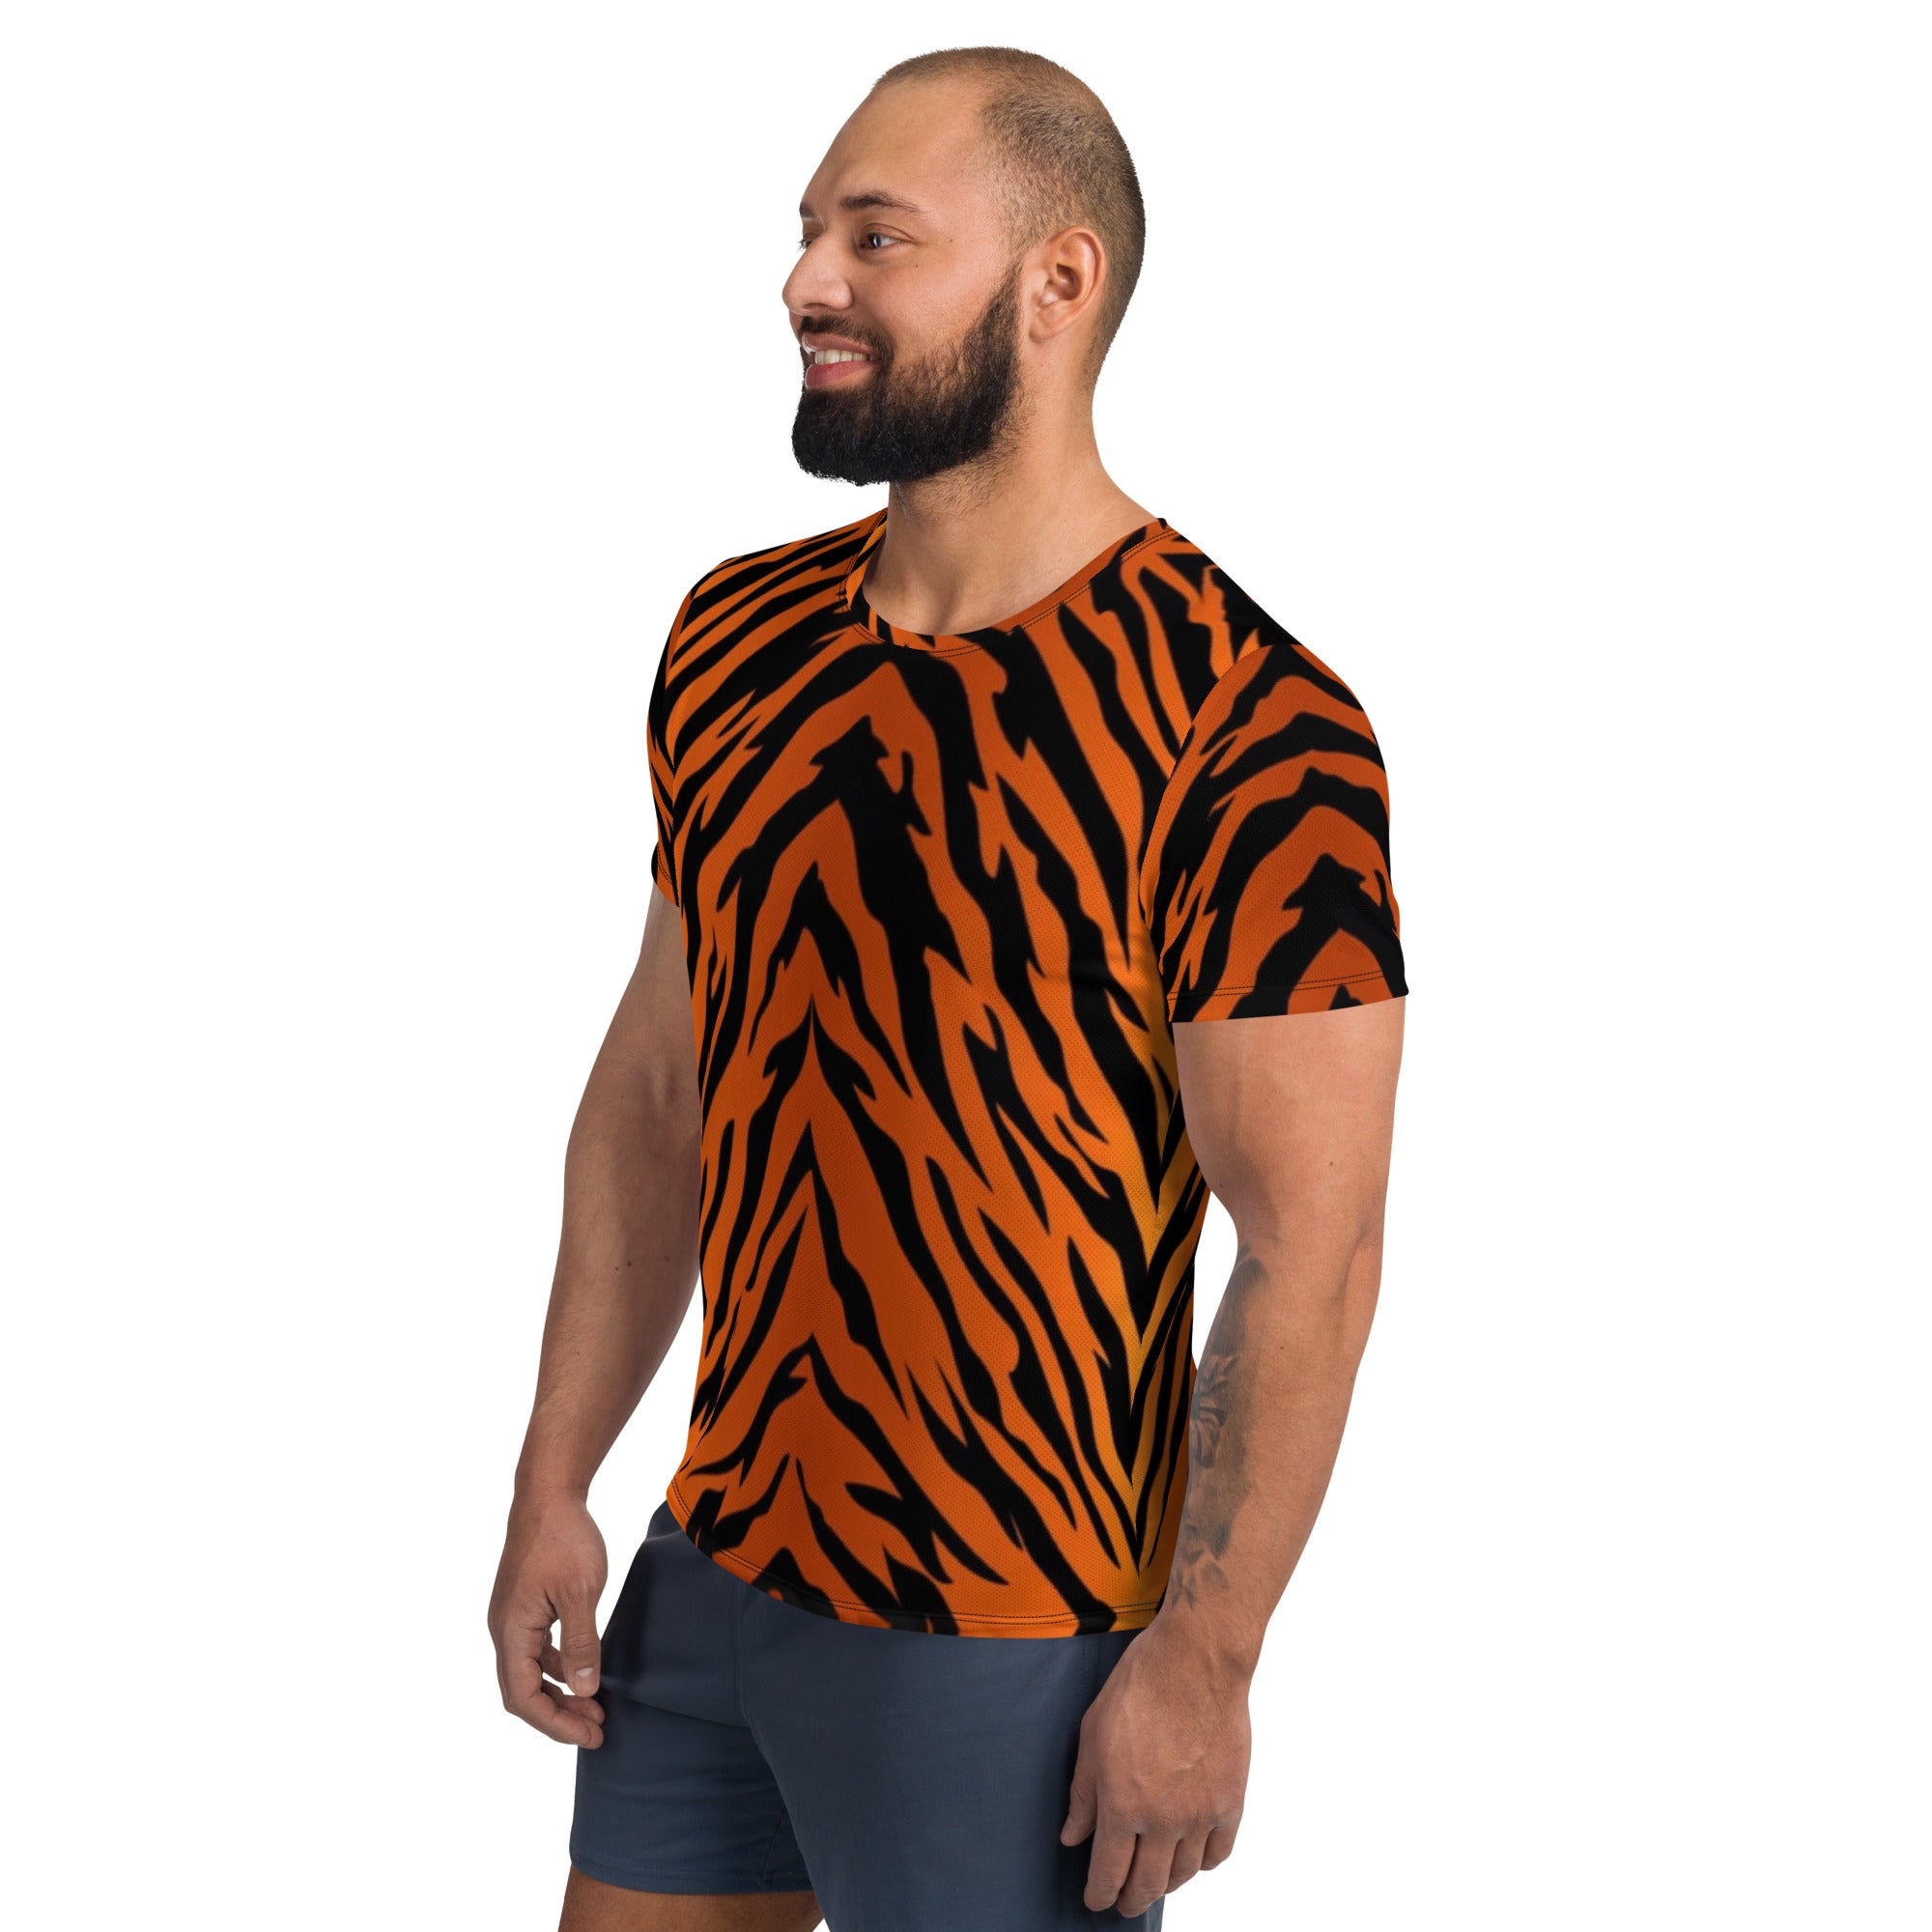 Bengal Tiger Stripe Men's Athletic T-shirt